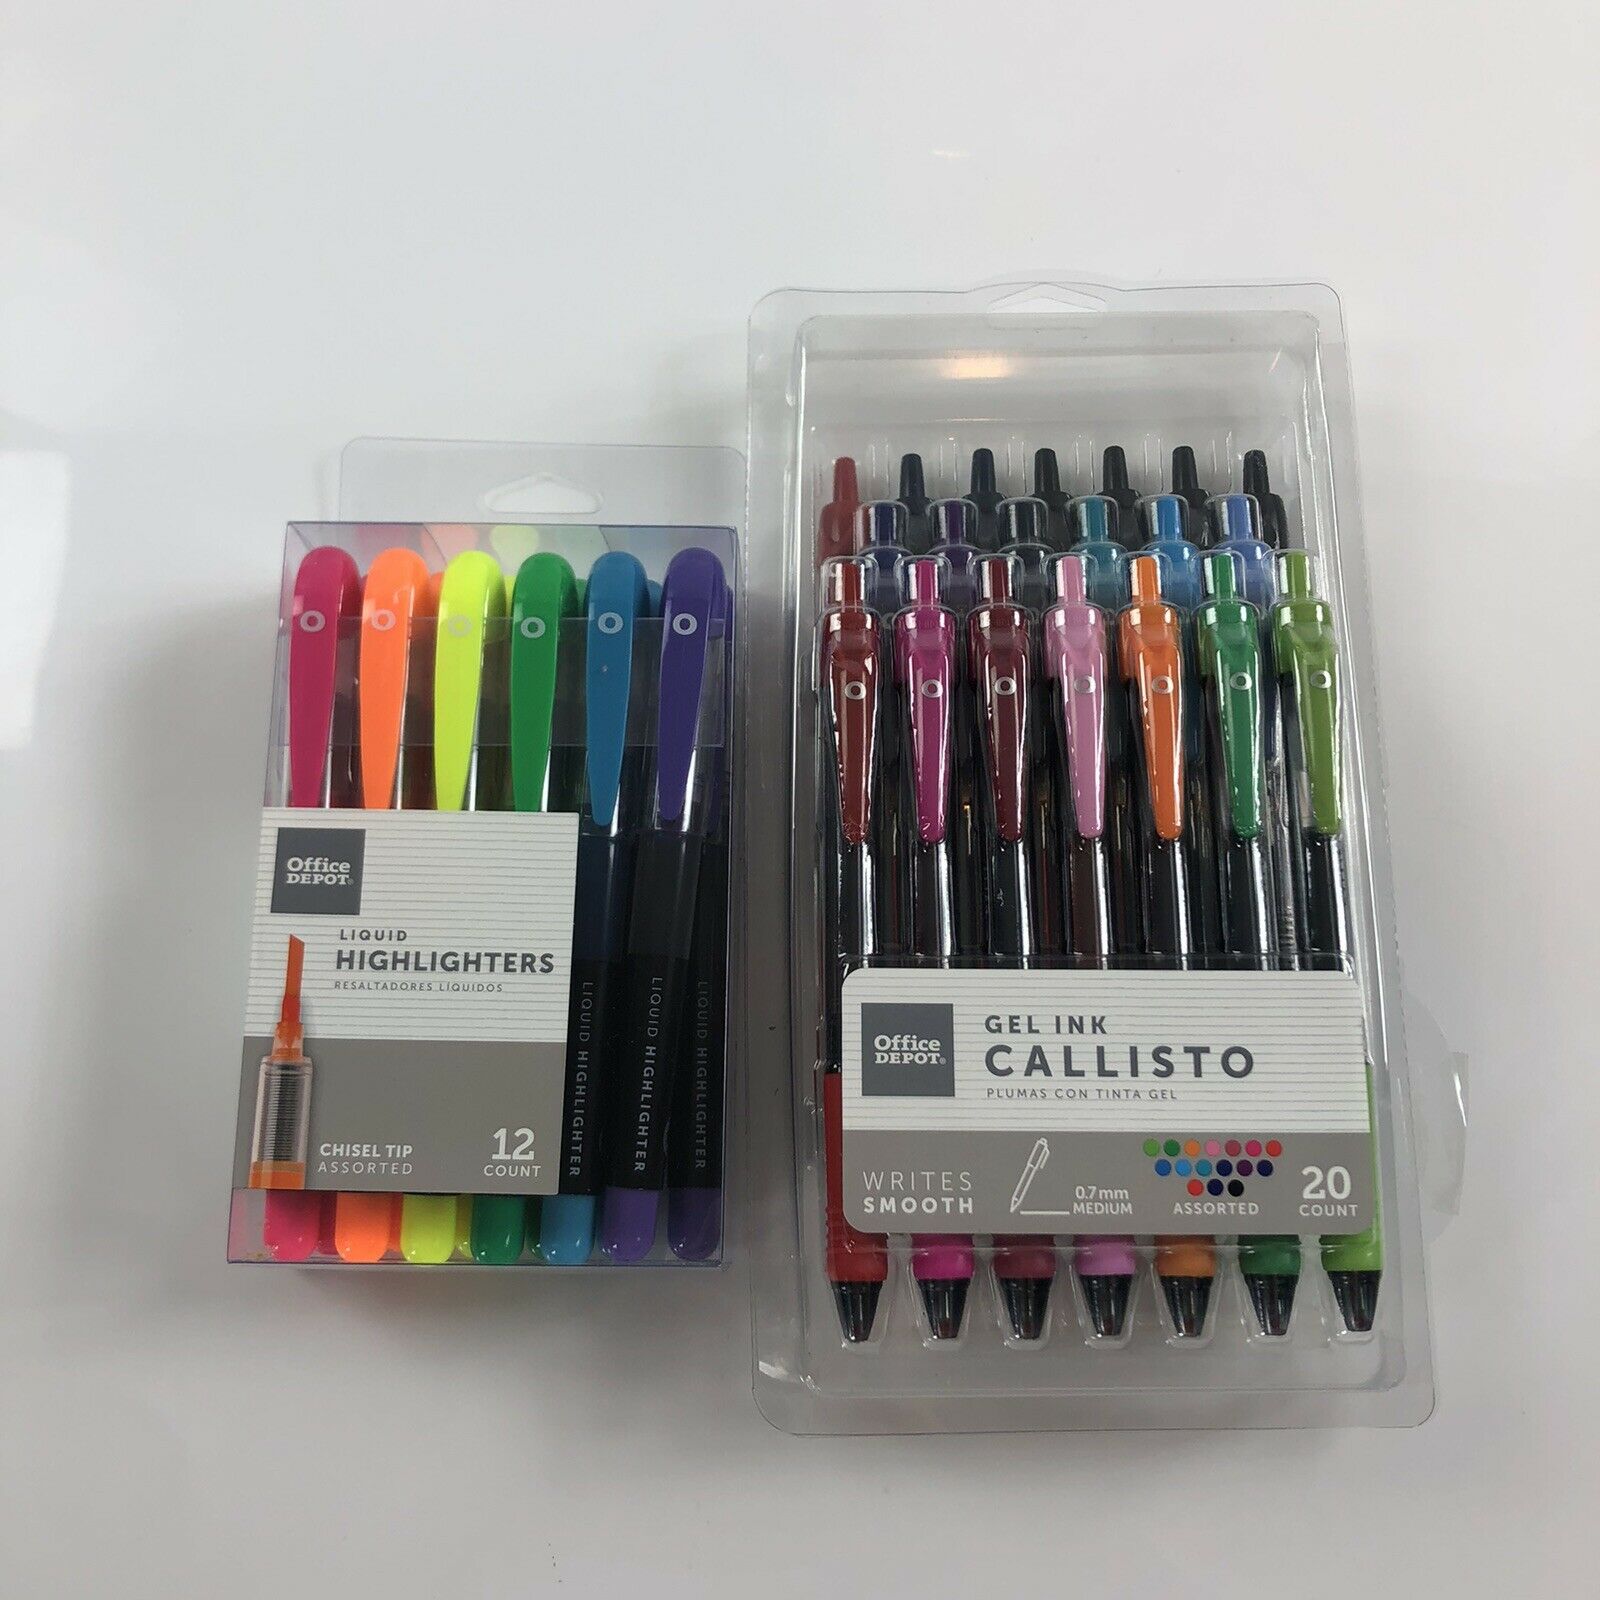 office-depot-gel-ink-callisto-and-liquid-highlighters